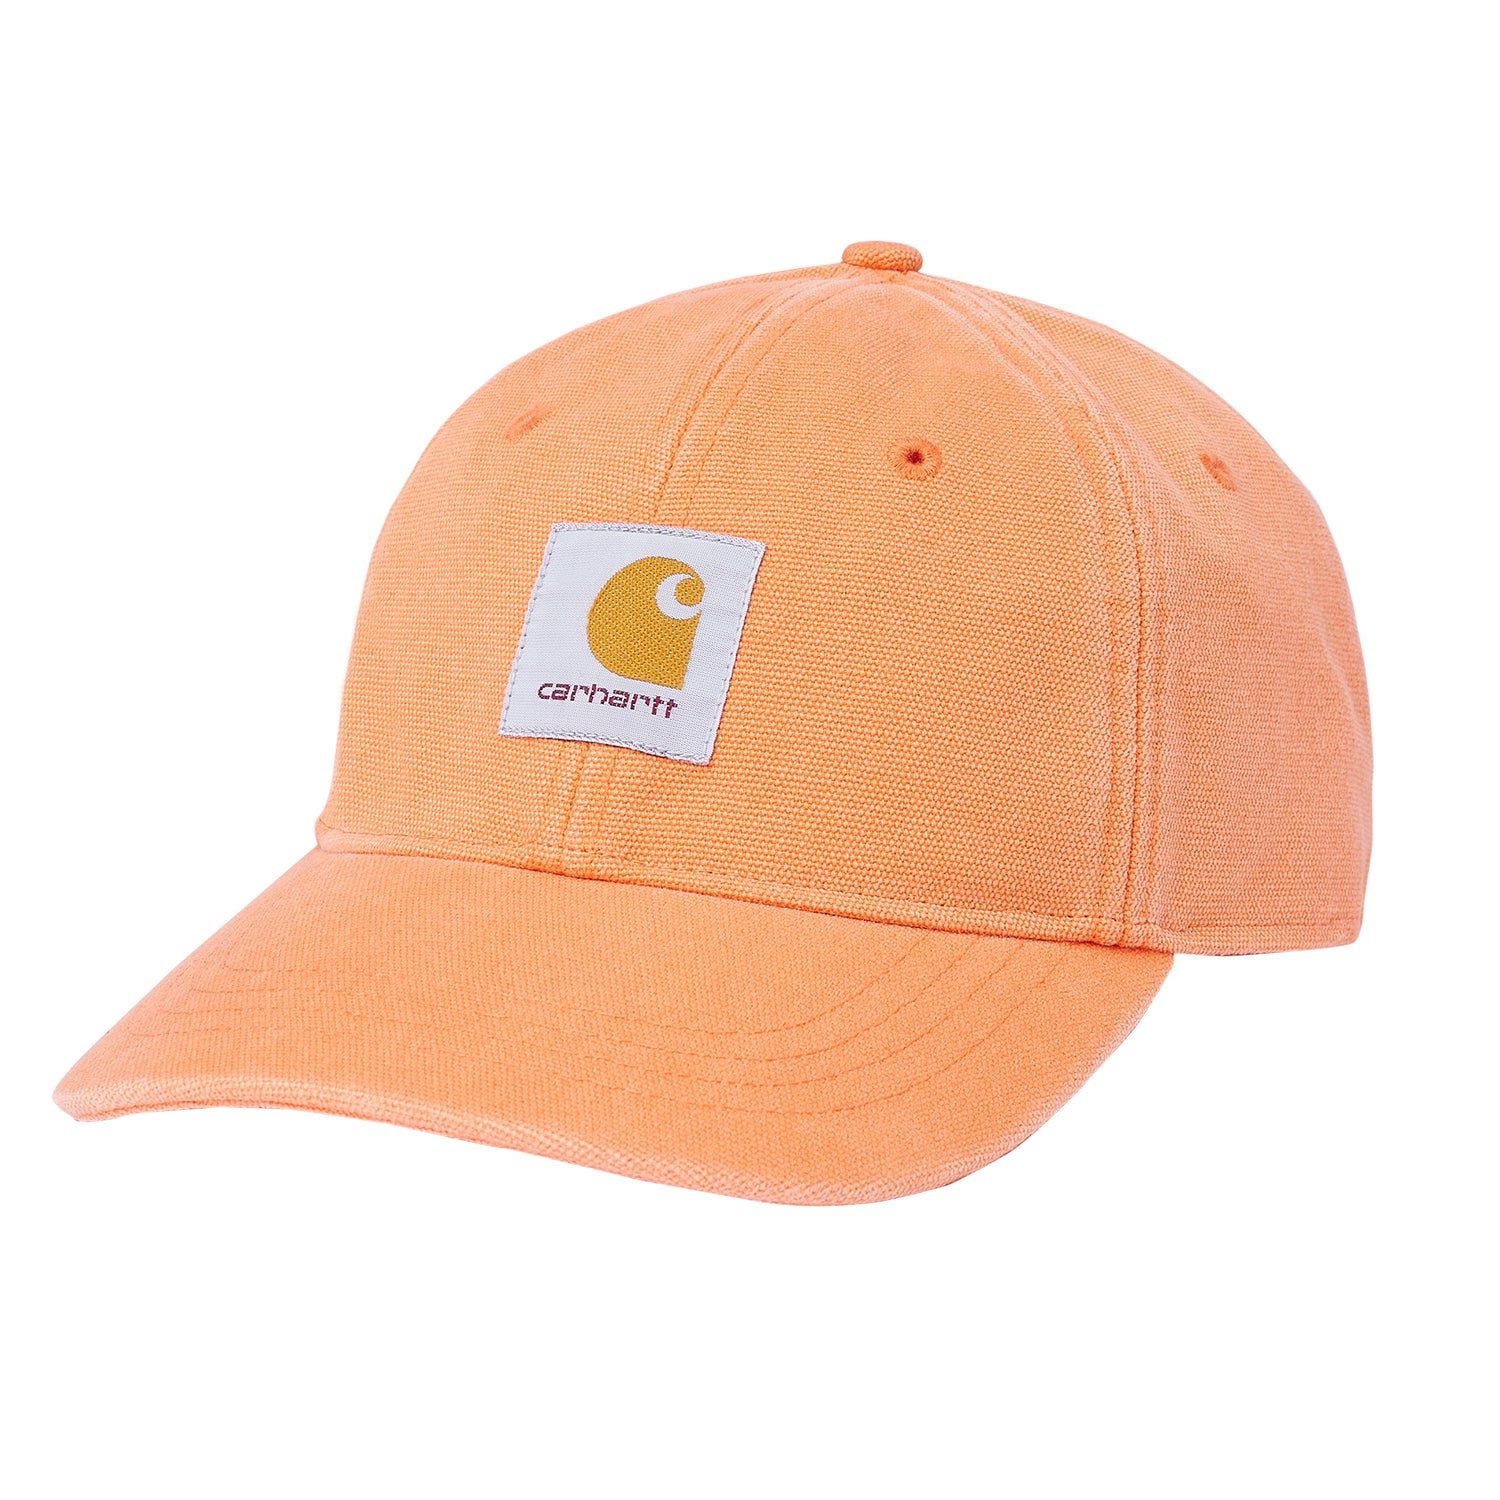 CANVAS 6-PANEL CAP - Dusty Orange / White